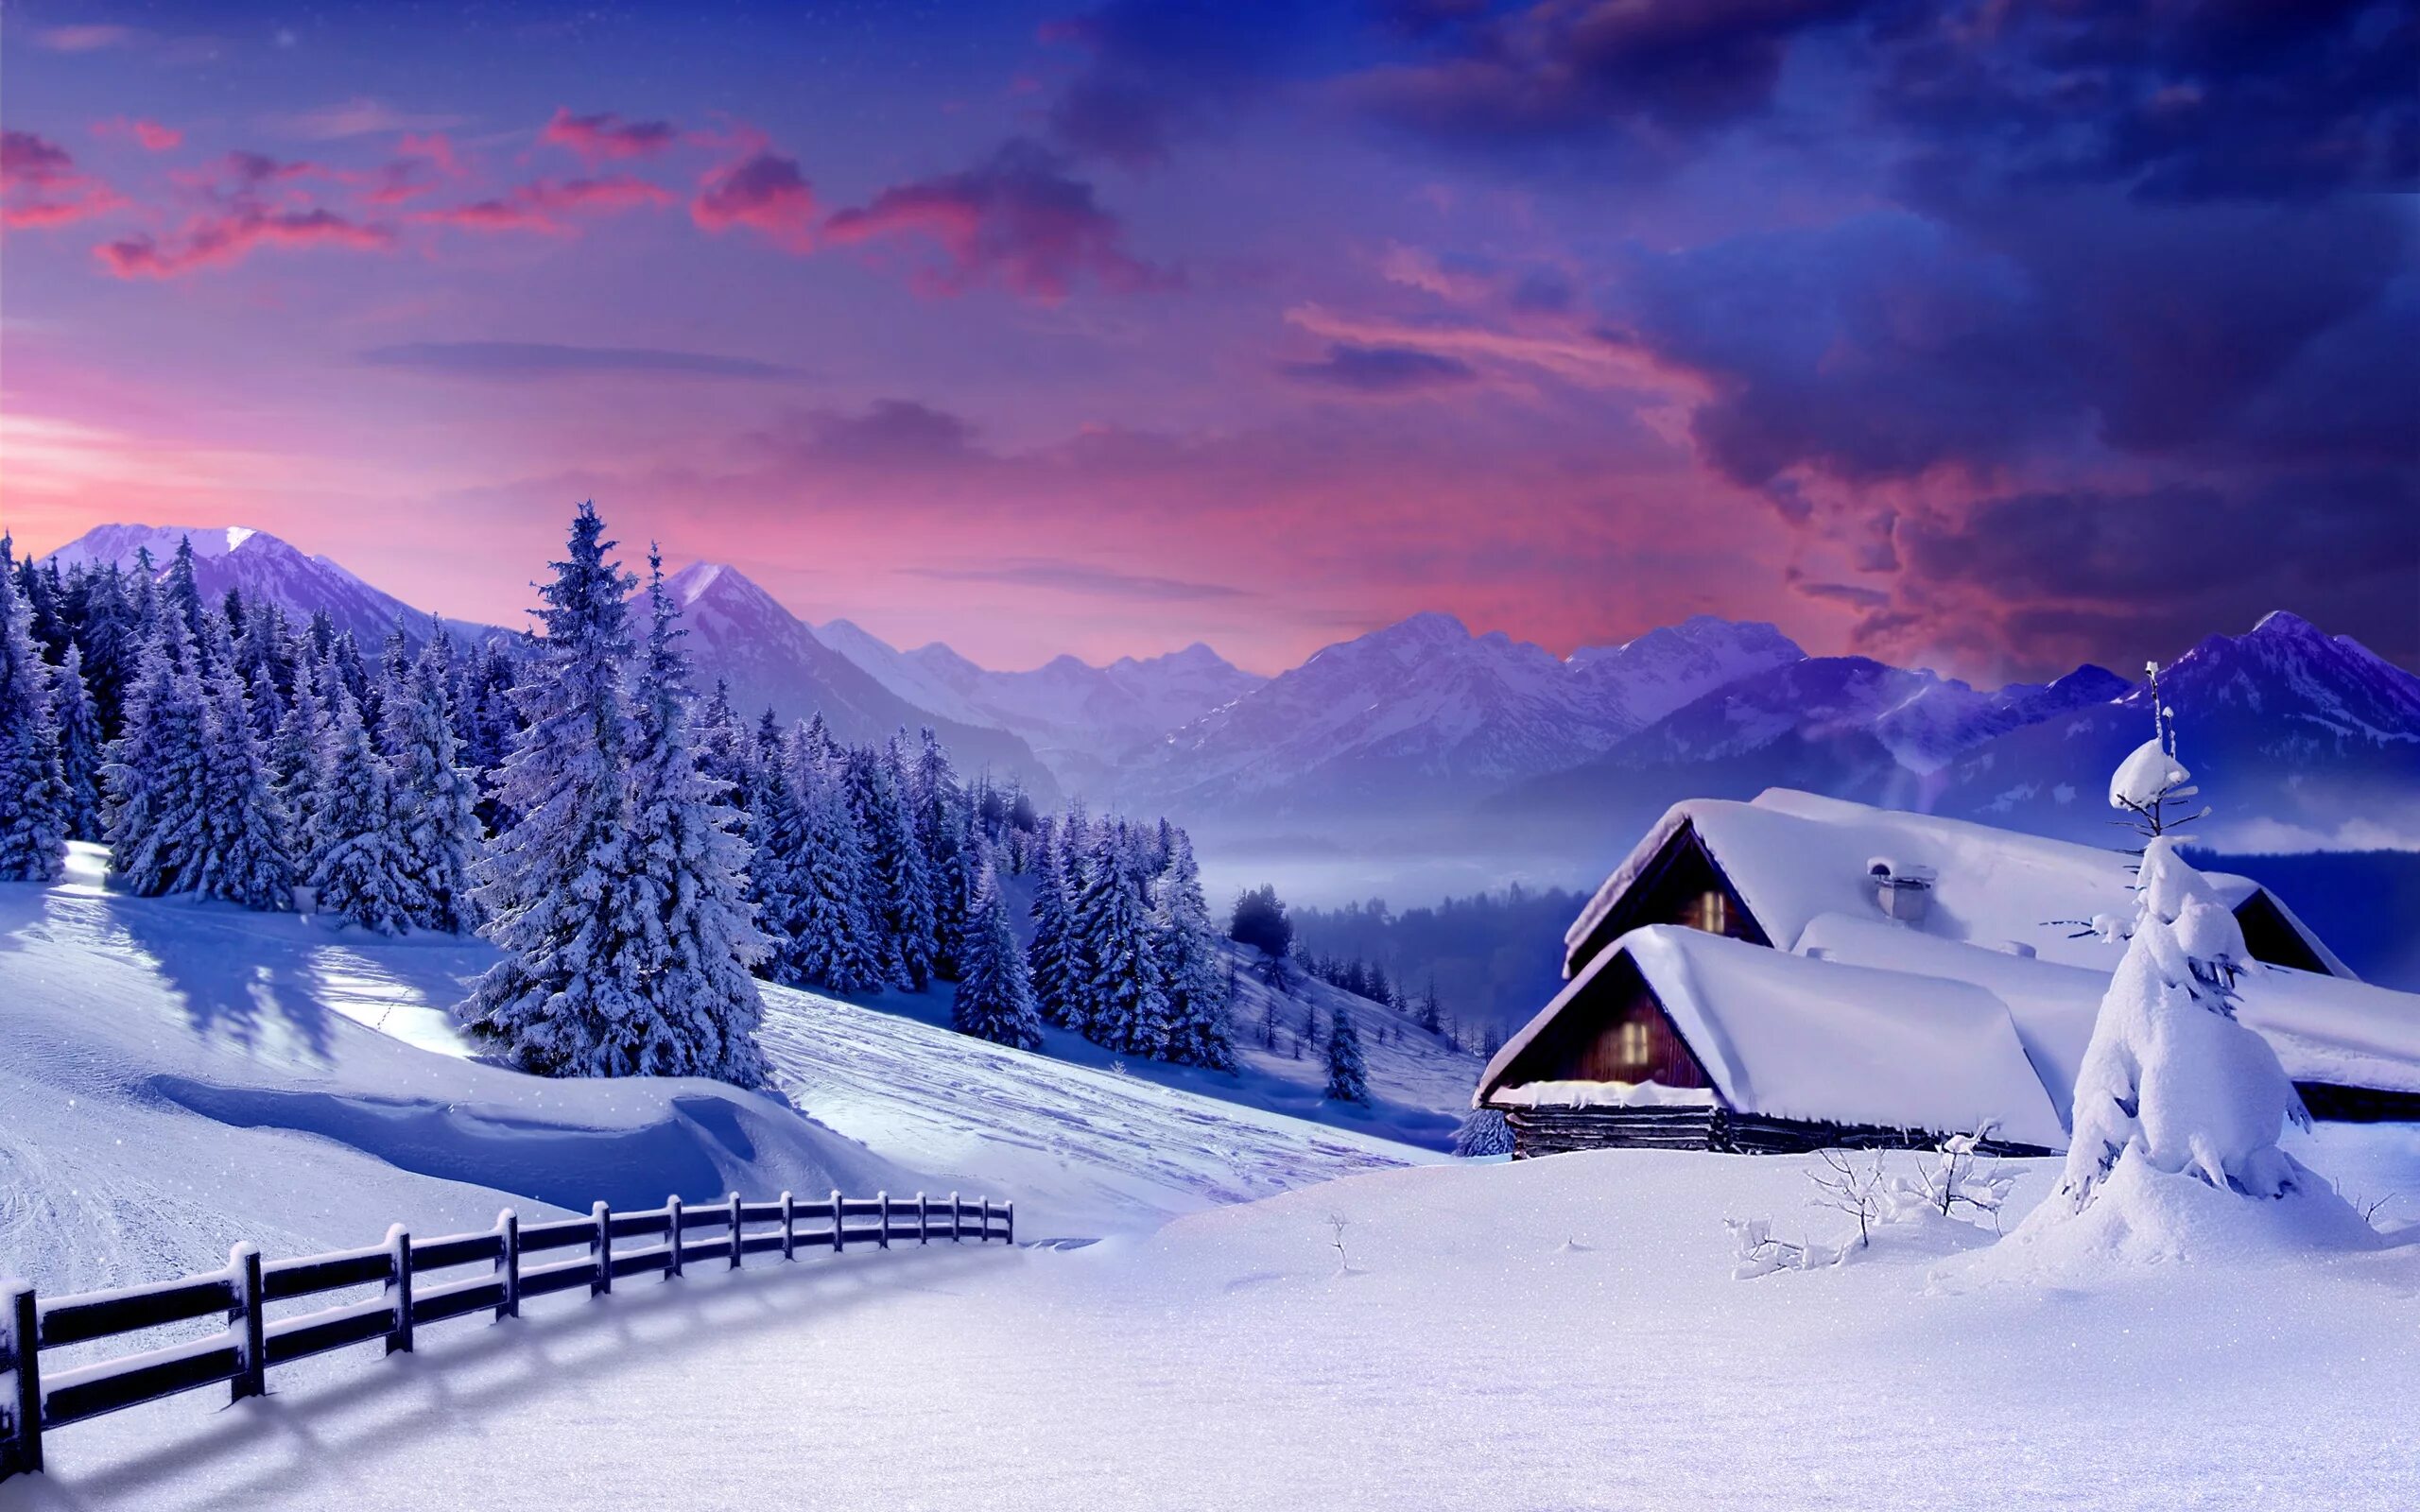 Snow is beautiful. Красивая зима. Природа зима. Снежный пейзаж. Обои зима.